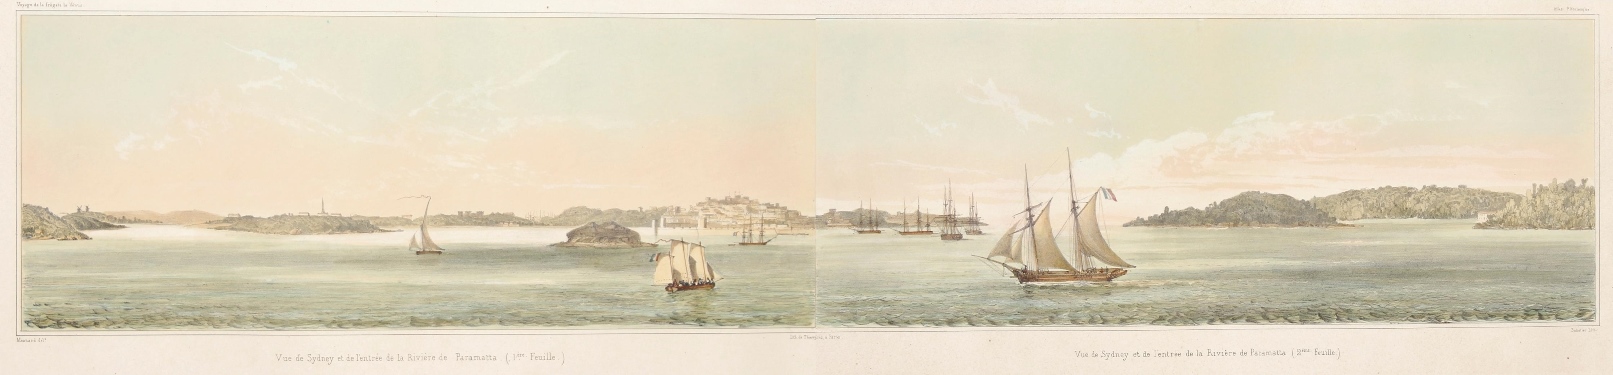  - Sydney - after Theodore Mesnard, 1838